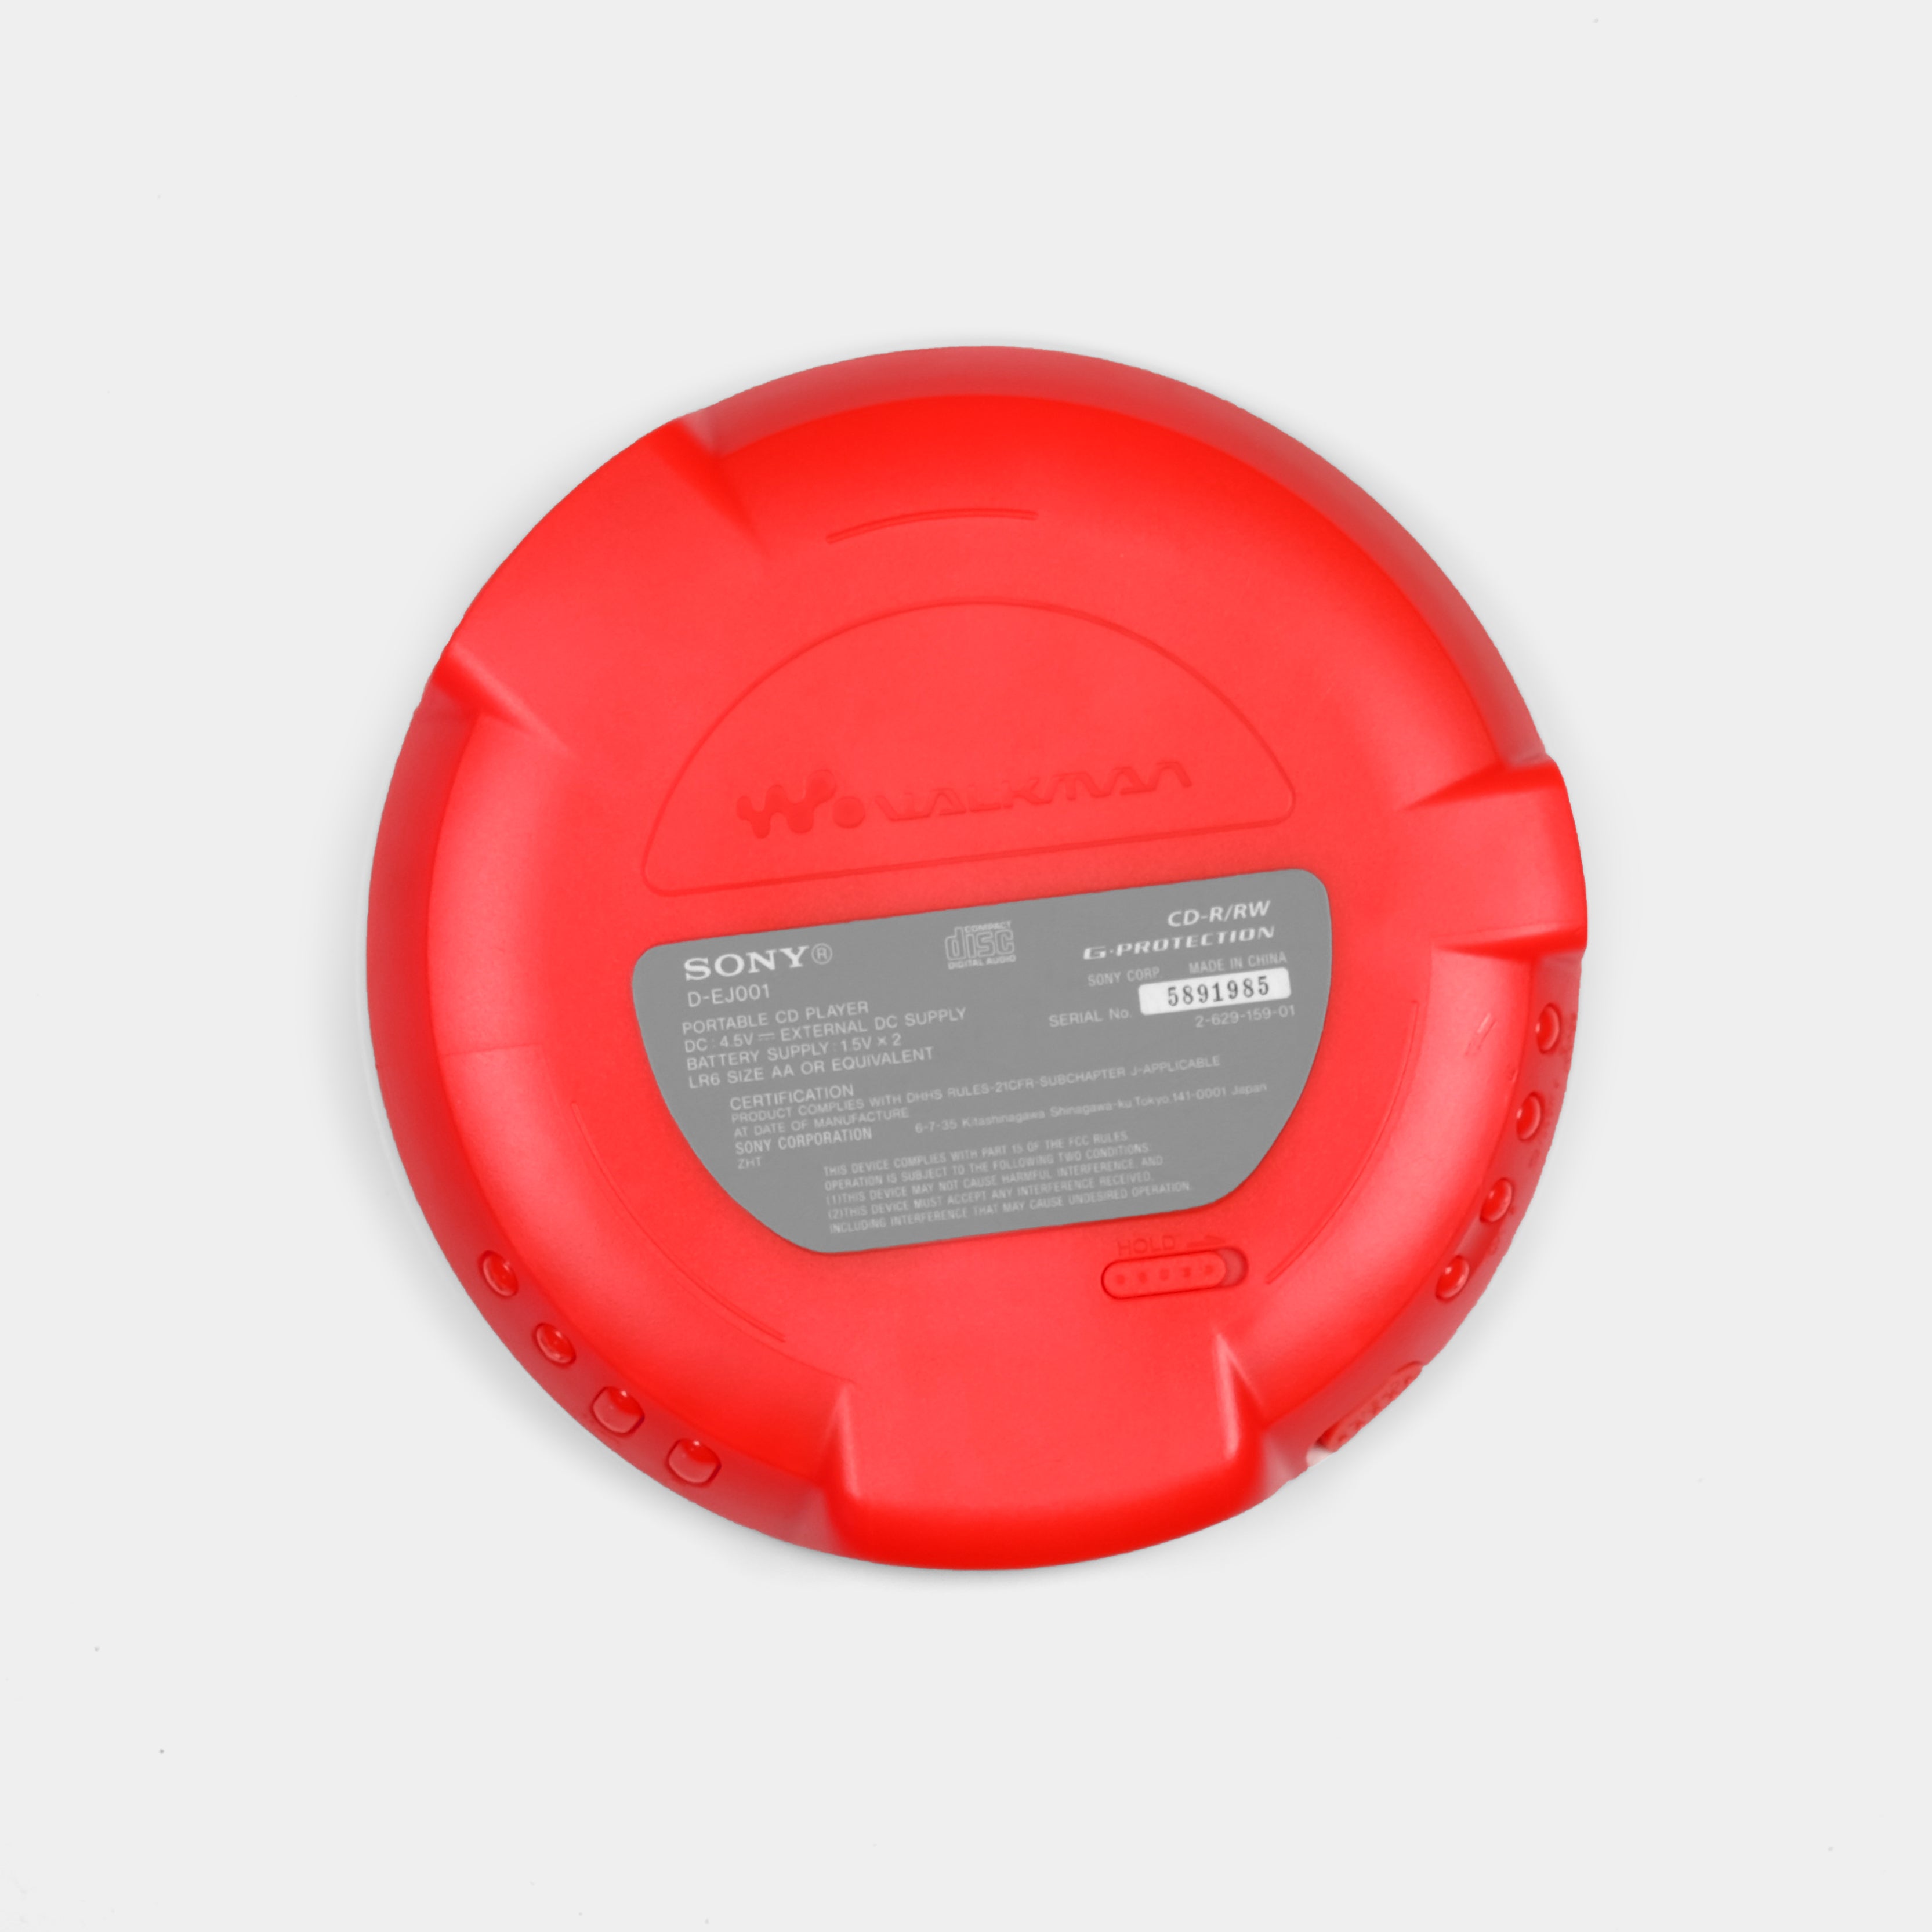 Sony Walkman D-EJ001 Red Portable CD Player